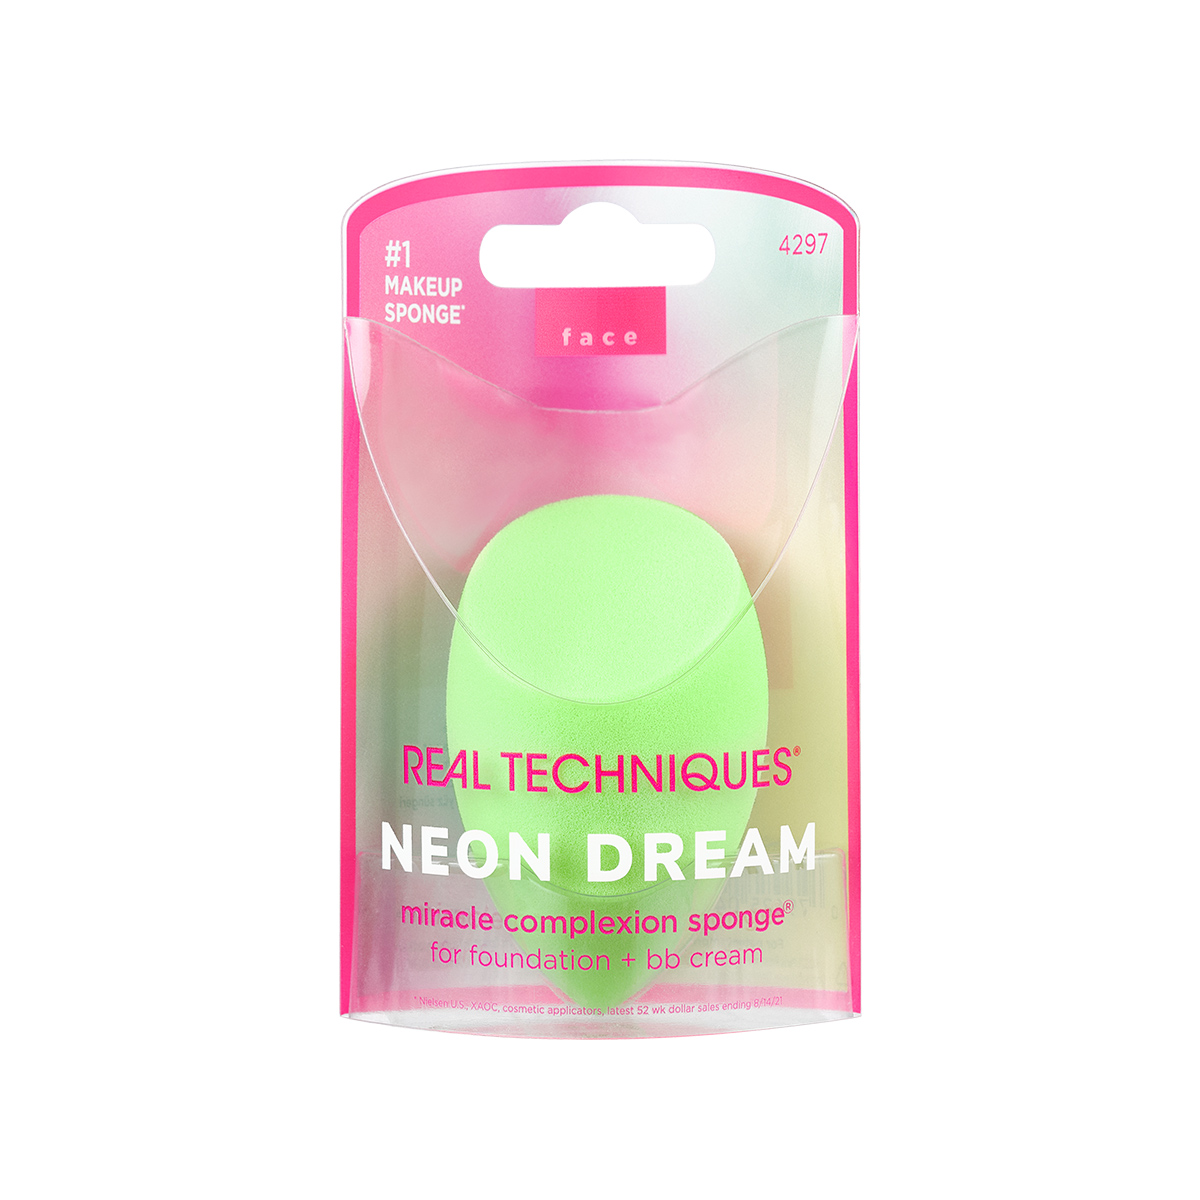 Real Techniques Neon Dream Miracle Complexion Sponge - интернет-магазин профессиональной косметики Spadream, изображение 52977